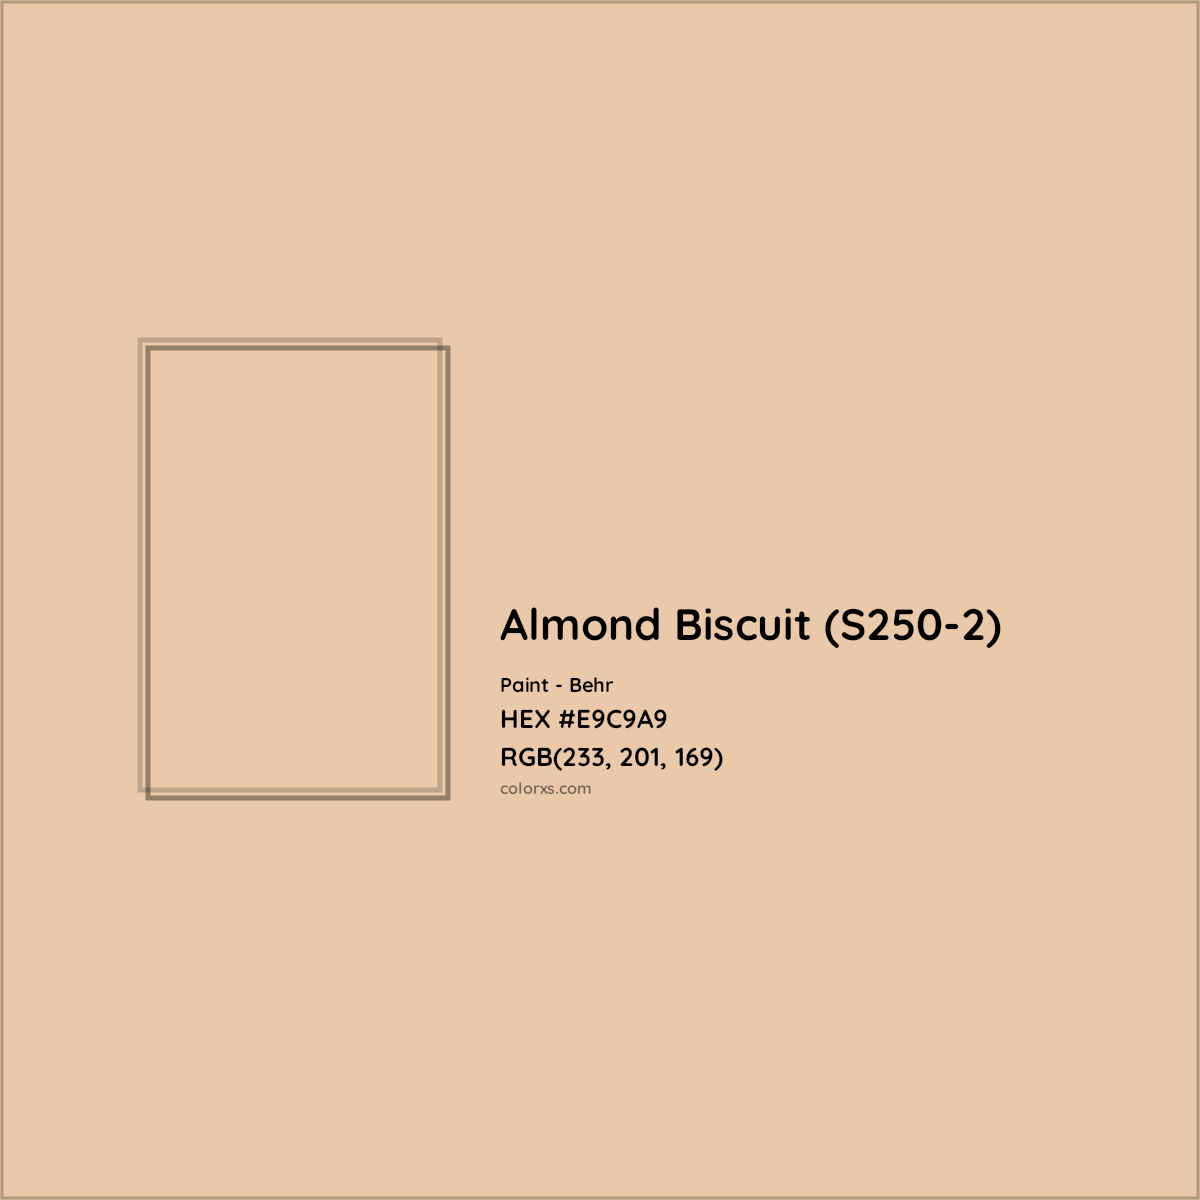 HEX #E9C9A9 Almond Biscuit (S250-2) Paint Behr - Color Code